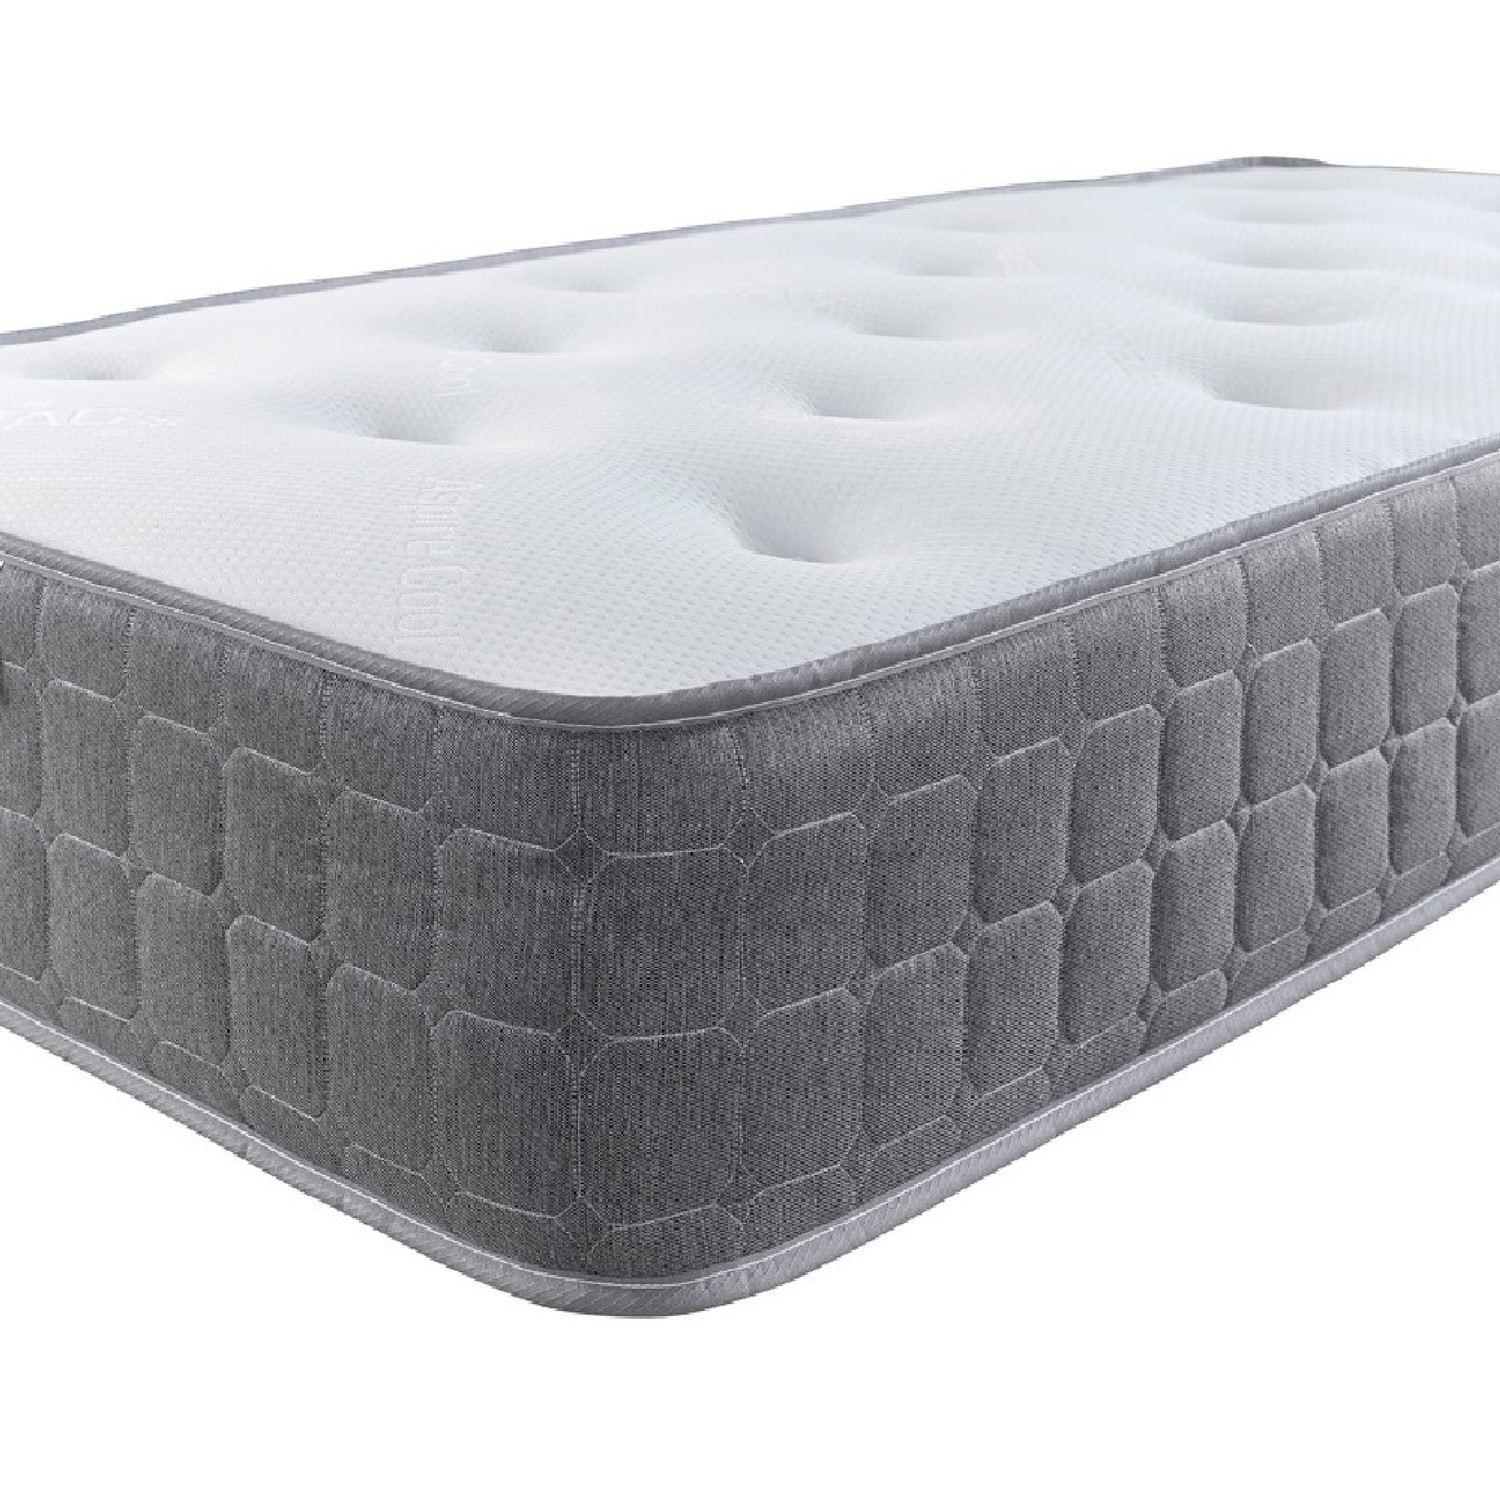 Aspire furniture quad comfort natural eco tufted spring mattress - single